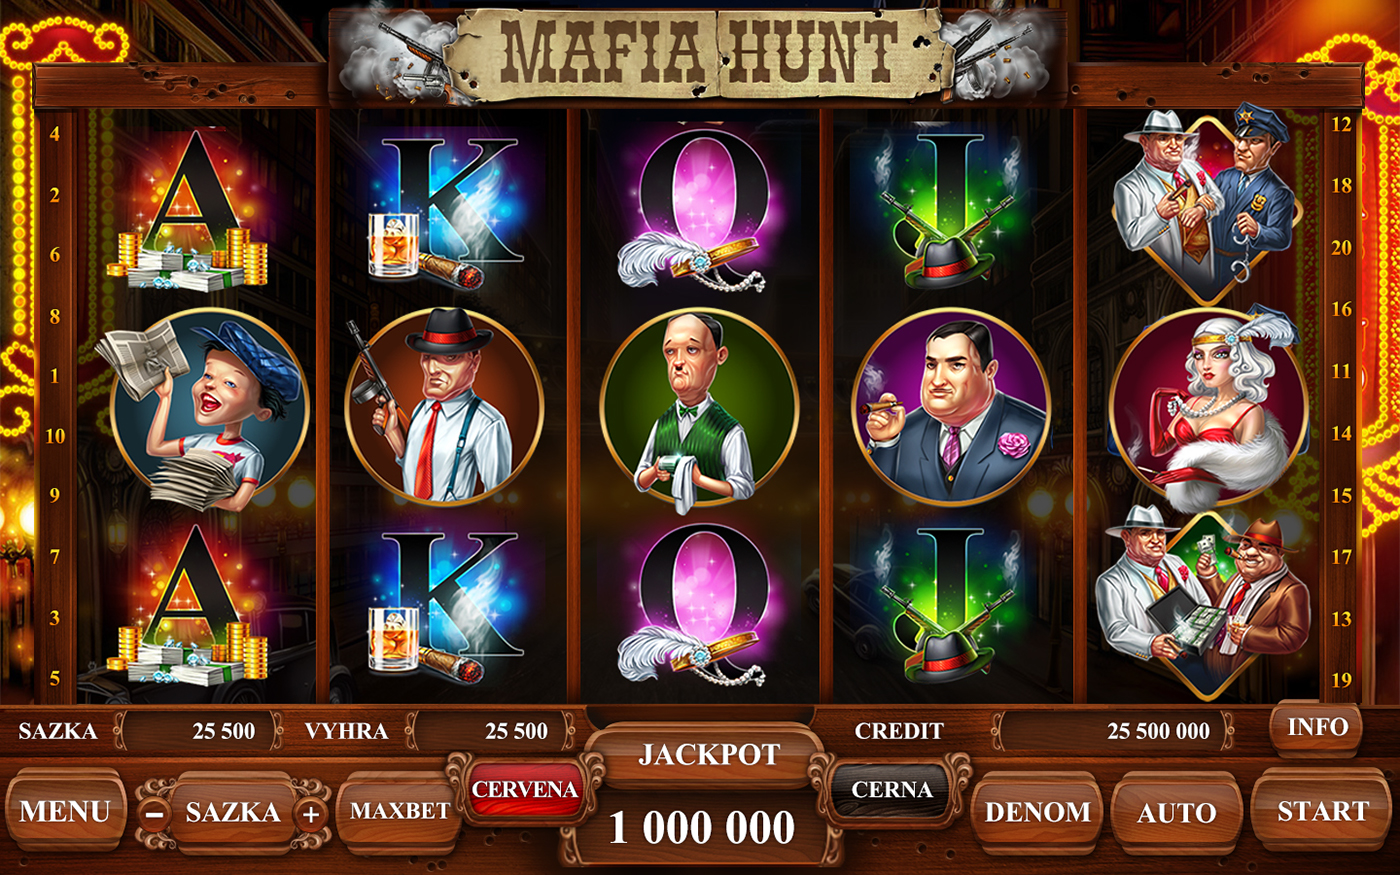 Slot machine - "Mafia hunt" on Behance